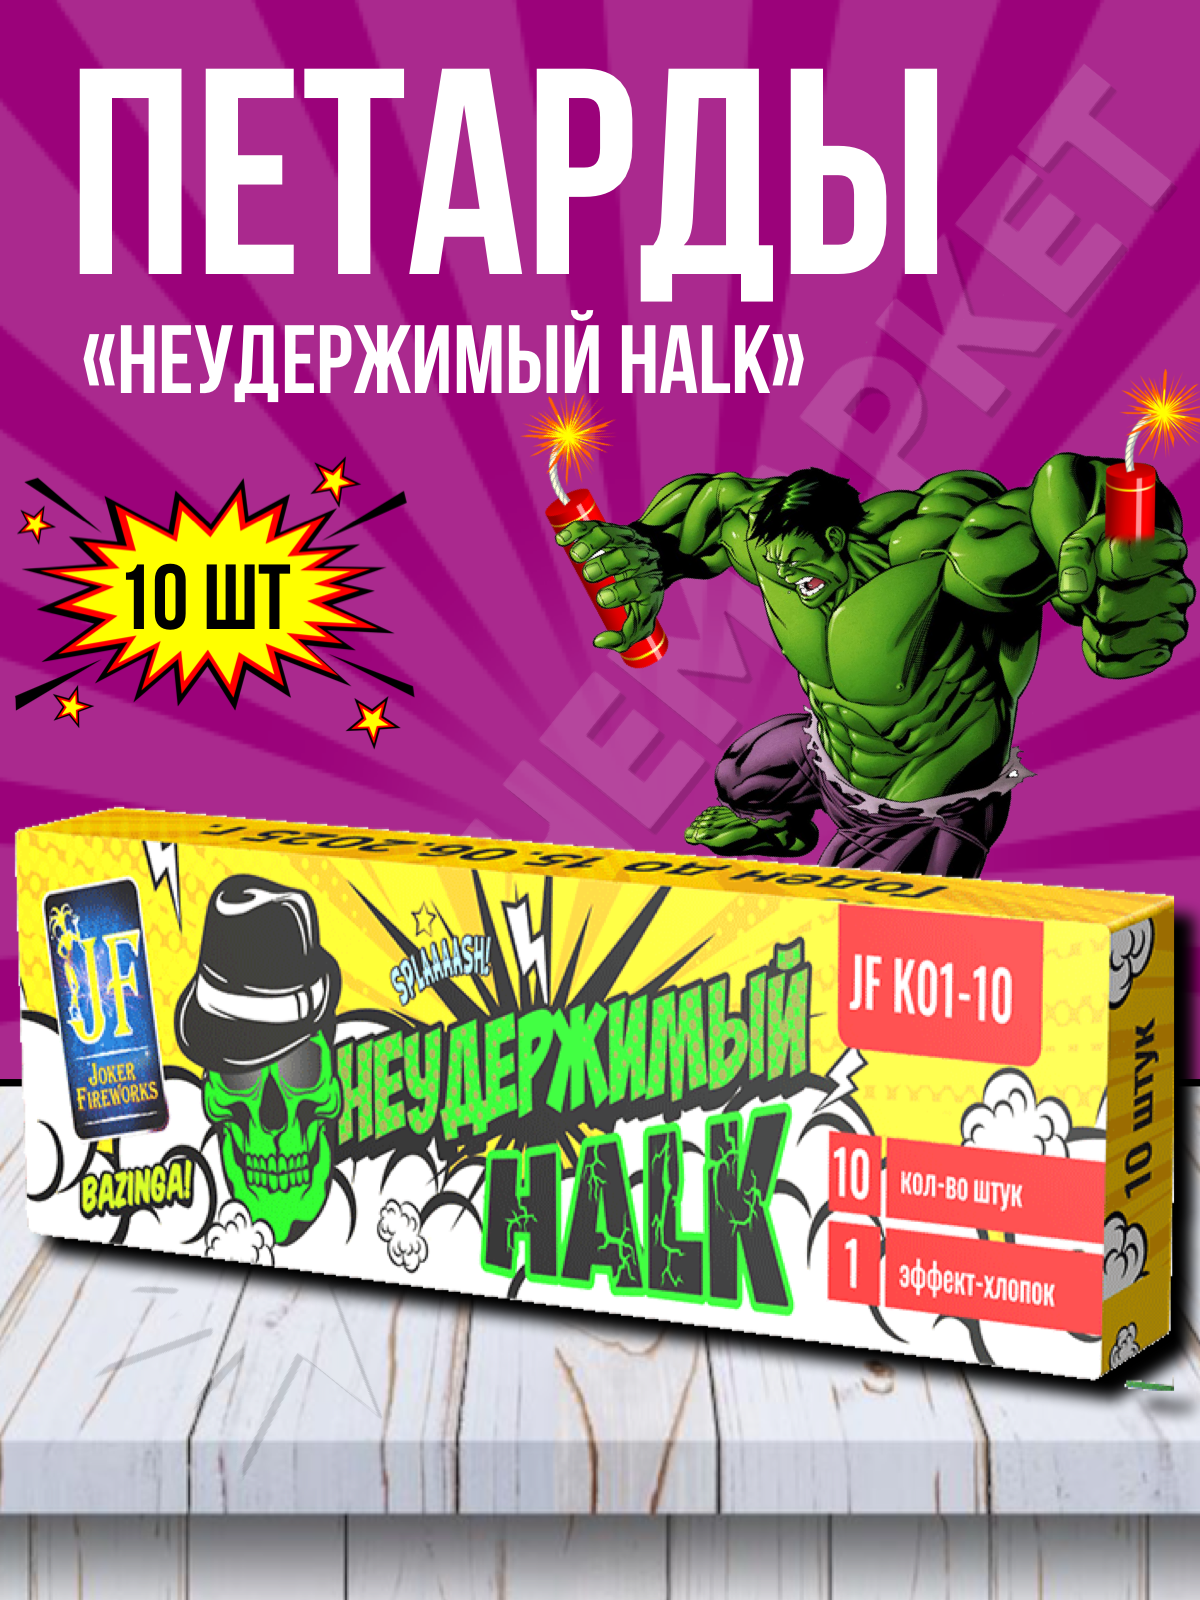 JF K01-10 Петарды "Неудержимый HALK" 10шт/уп